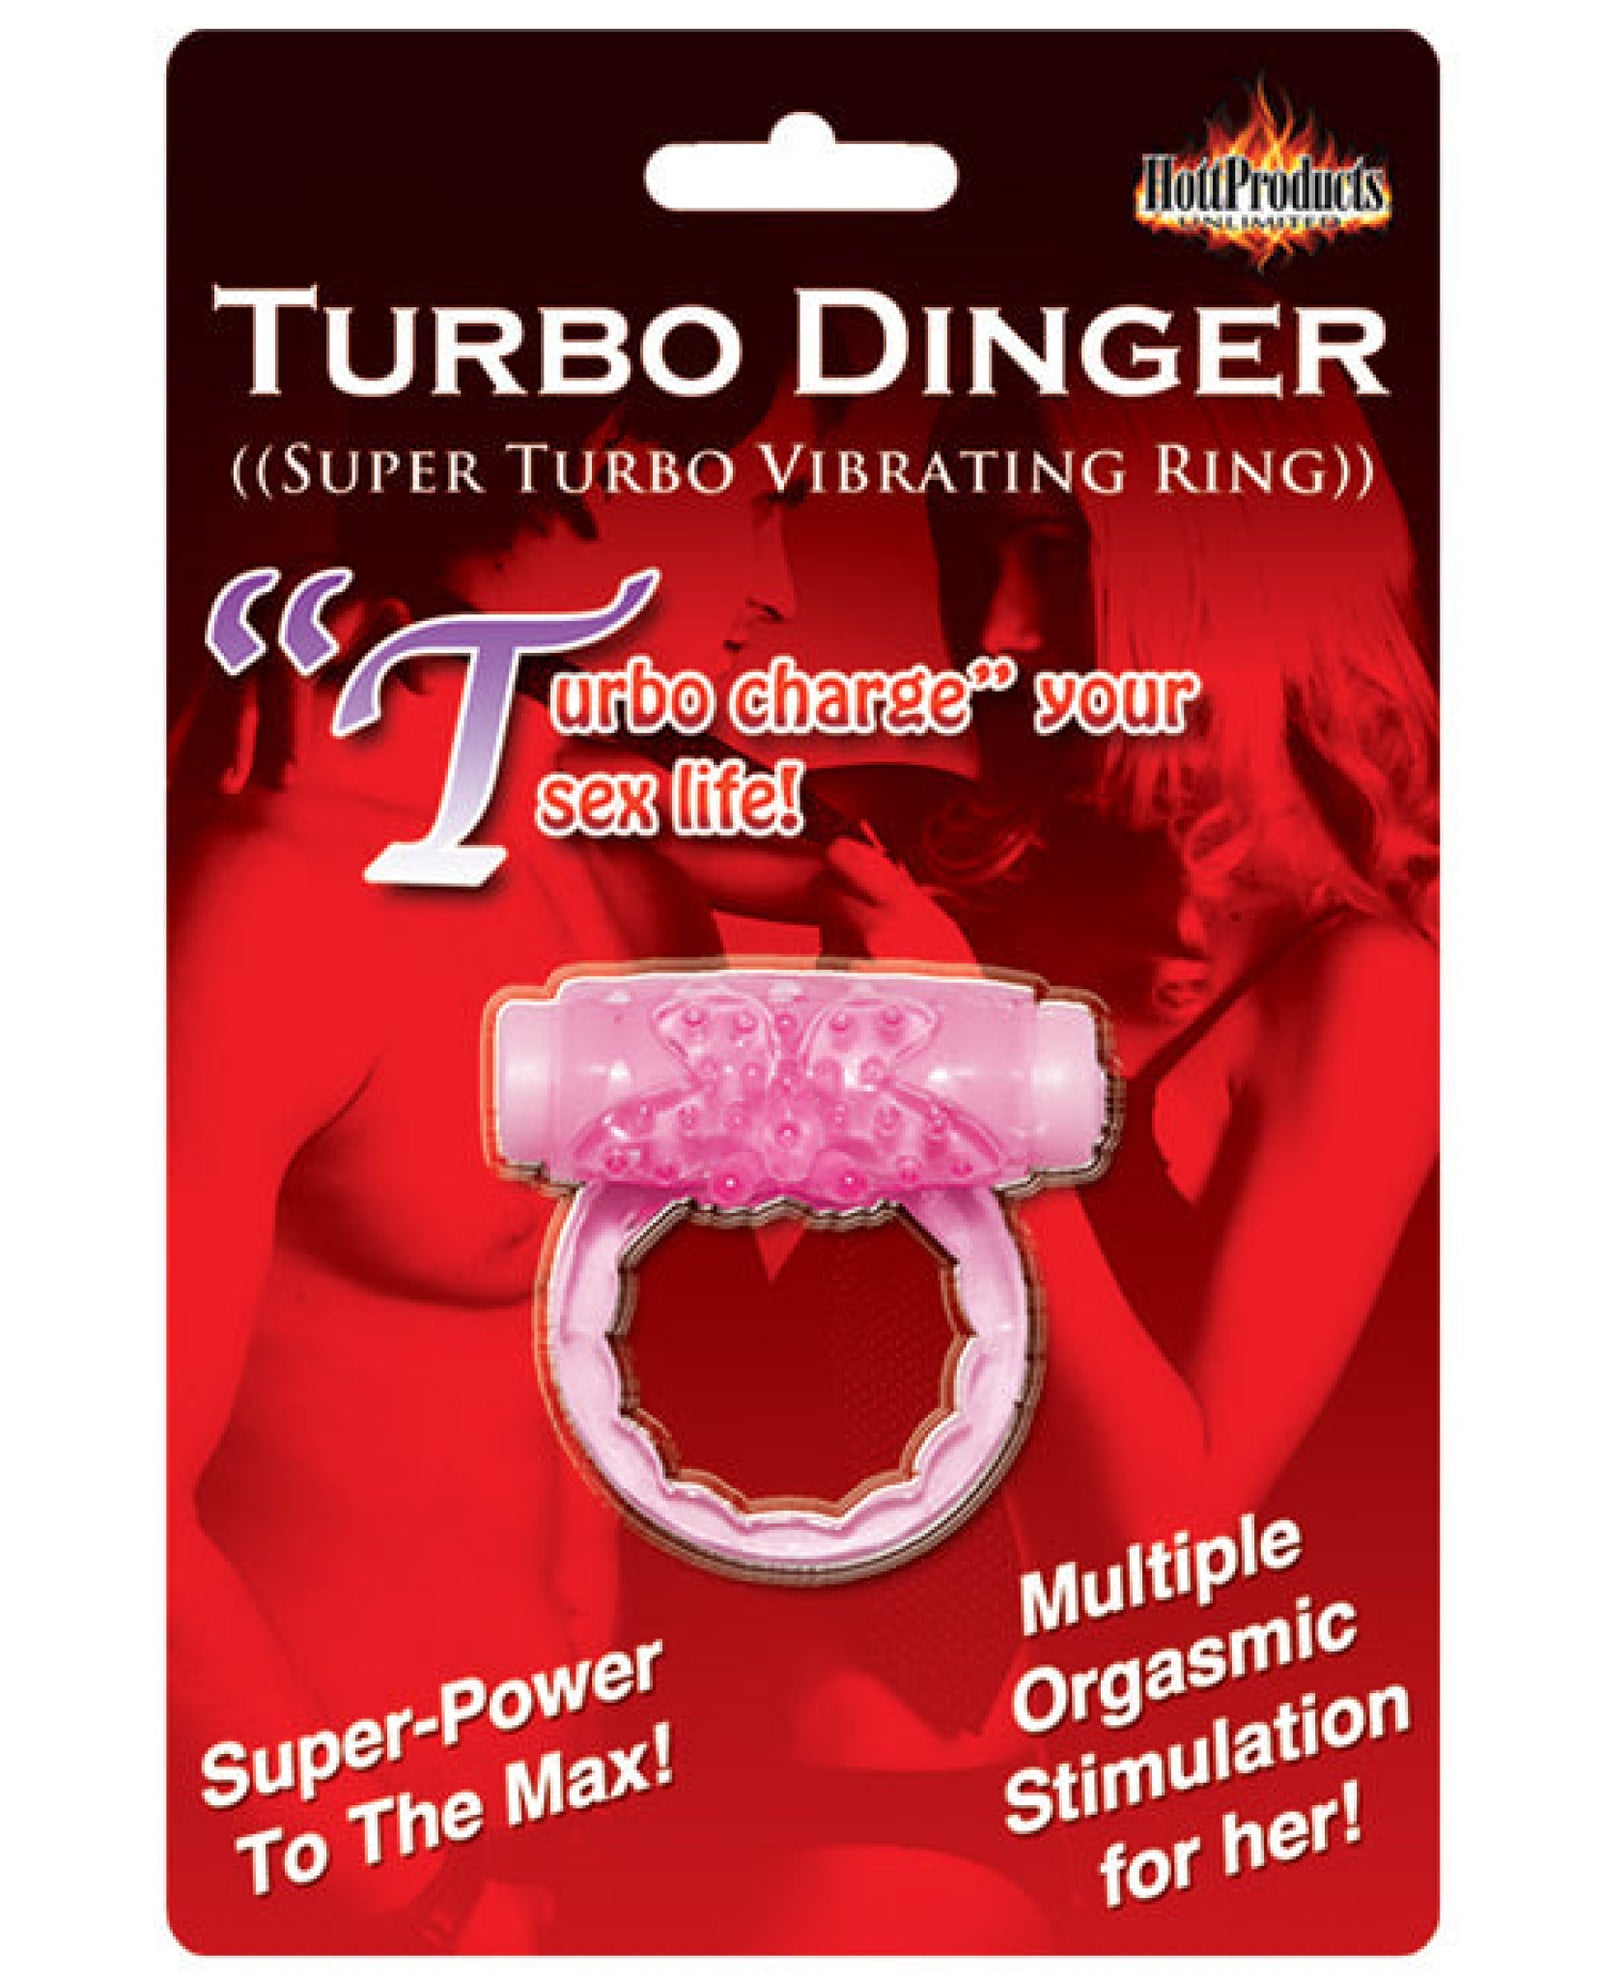 Humm Dinger Turbo Vibrating Cockring Hott Products